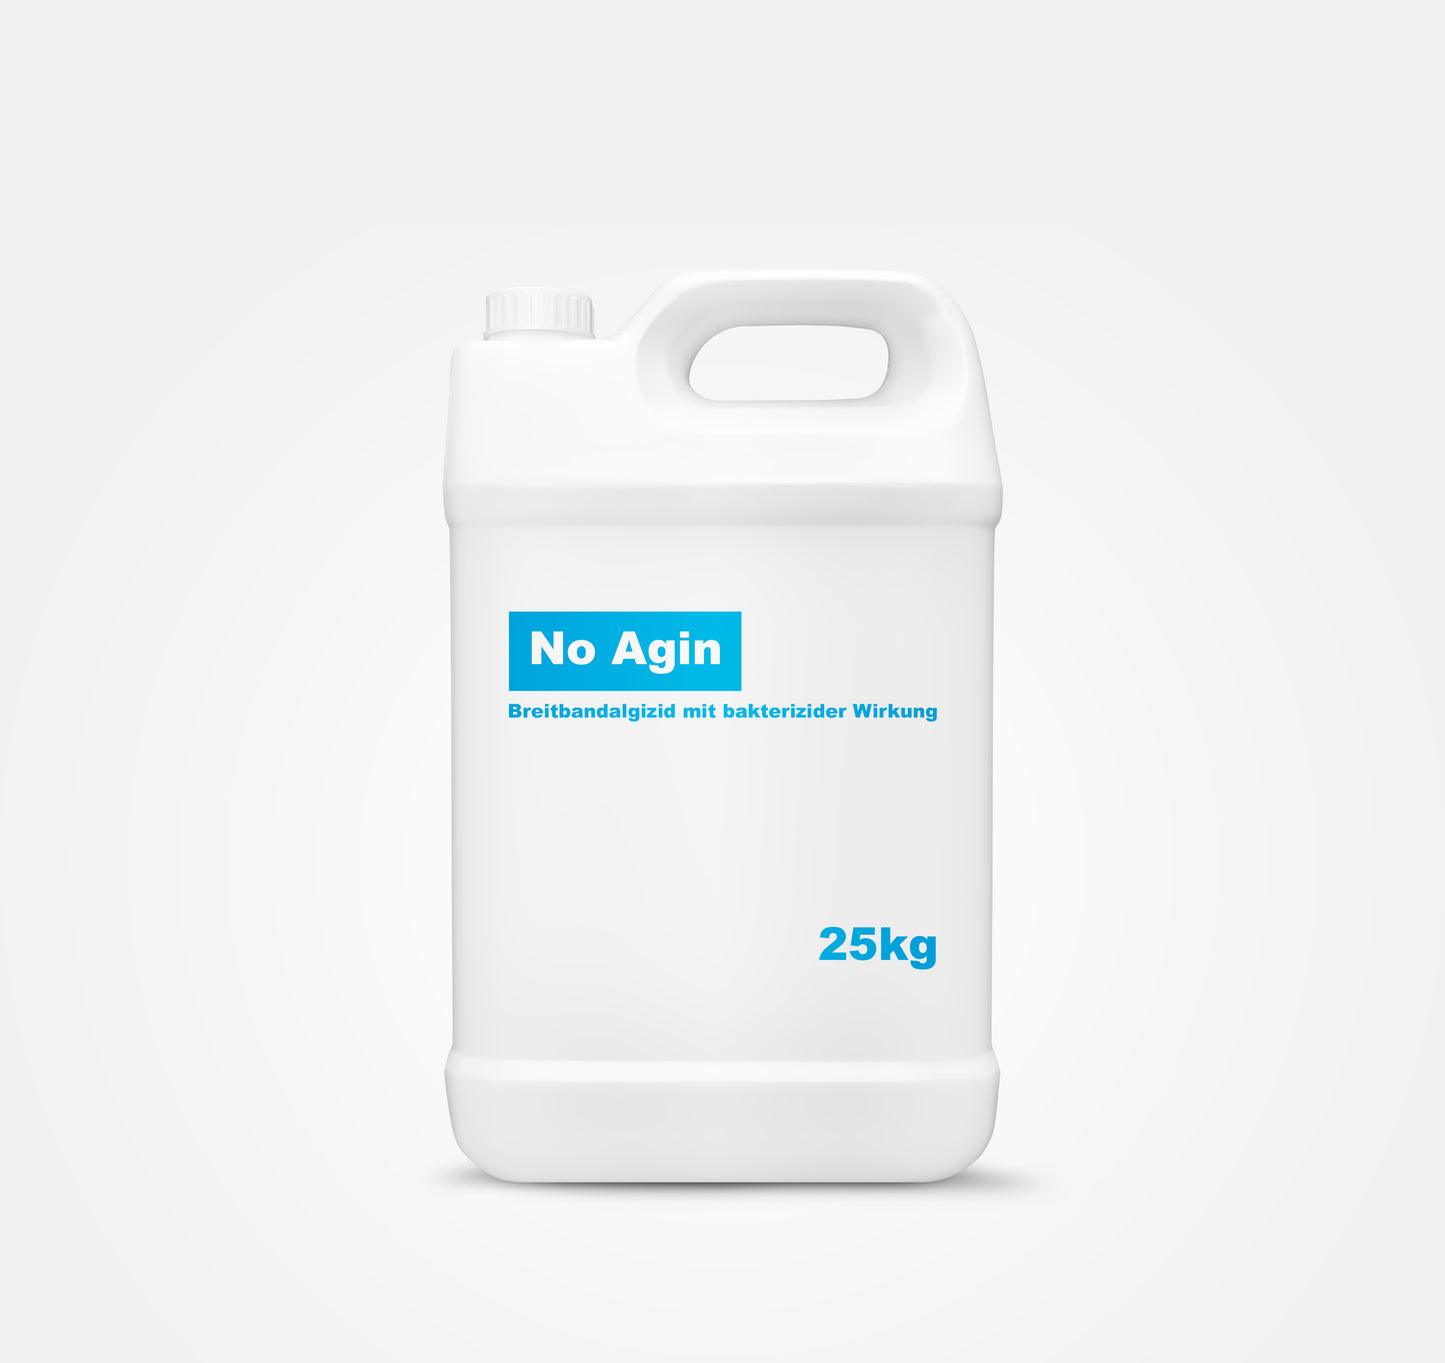 No Agin - Breitbandalgizid mit bakterizider Wirkung 25kg